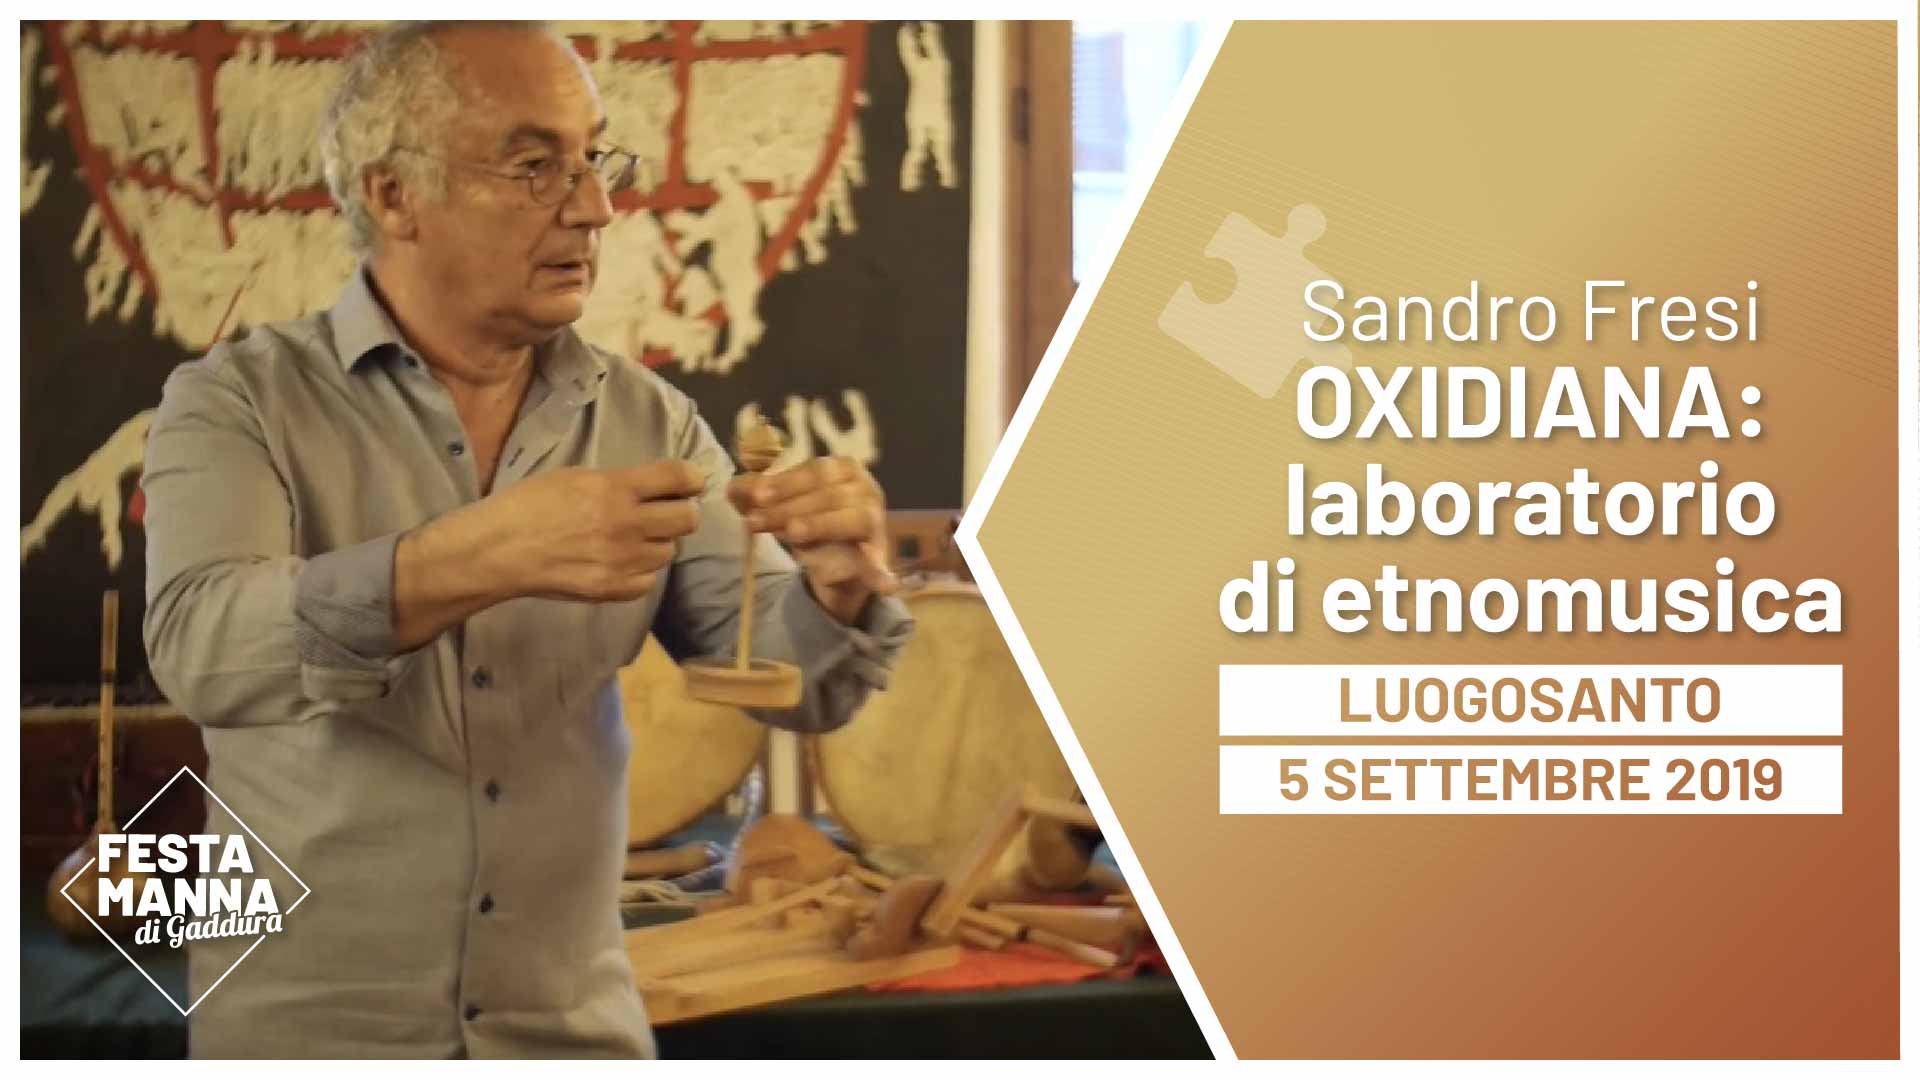 Oxidiana, Ethnomusik-Workshop mit Sandro Fresi | Festa Manna di Gaddura 2019